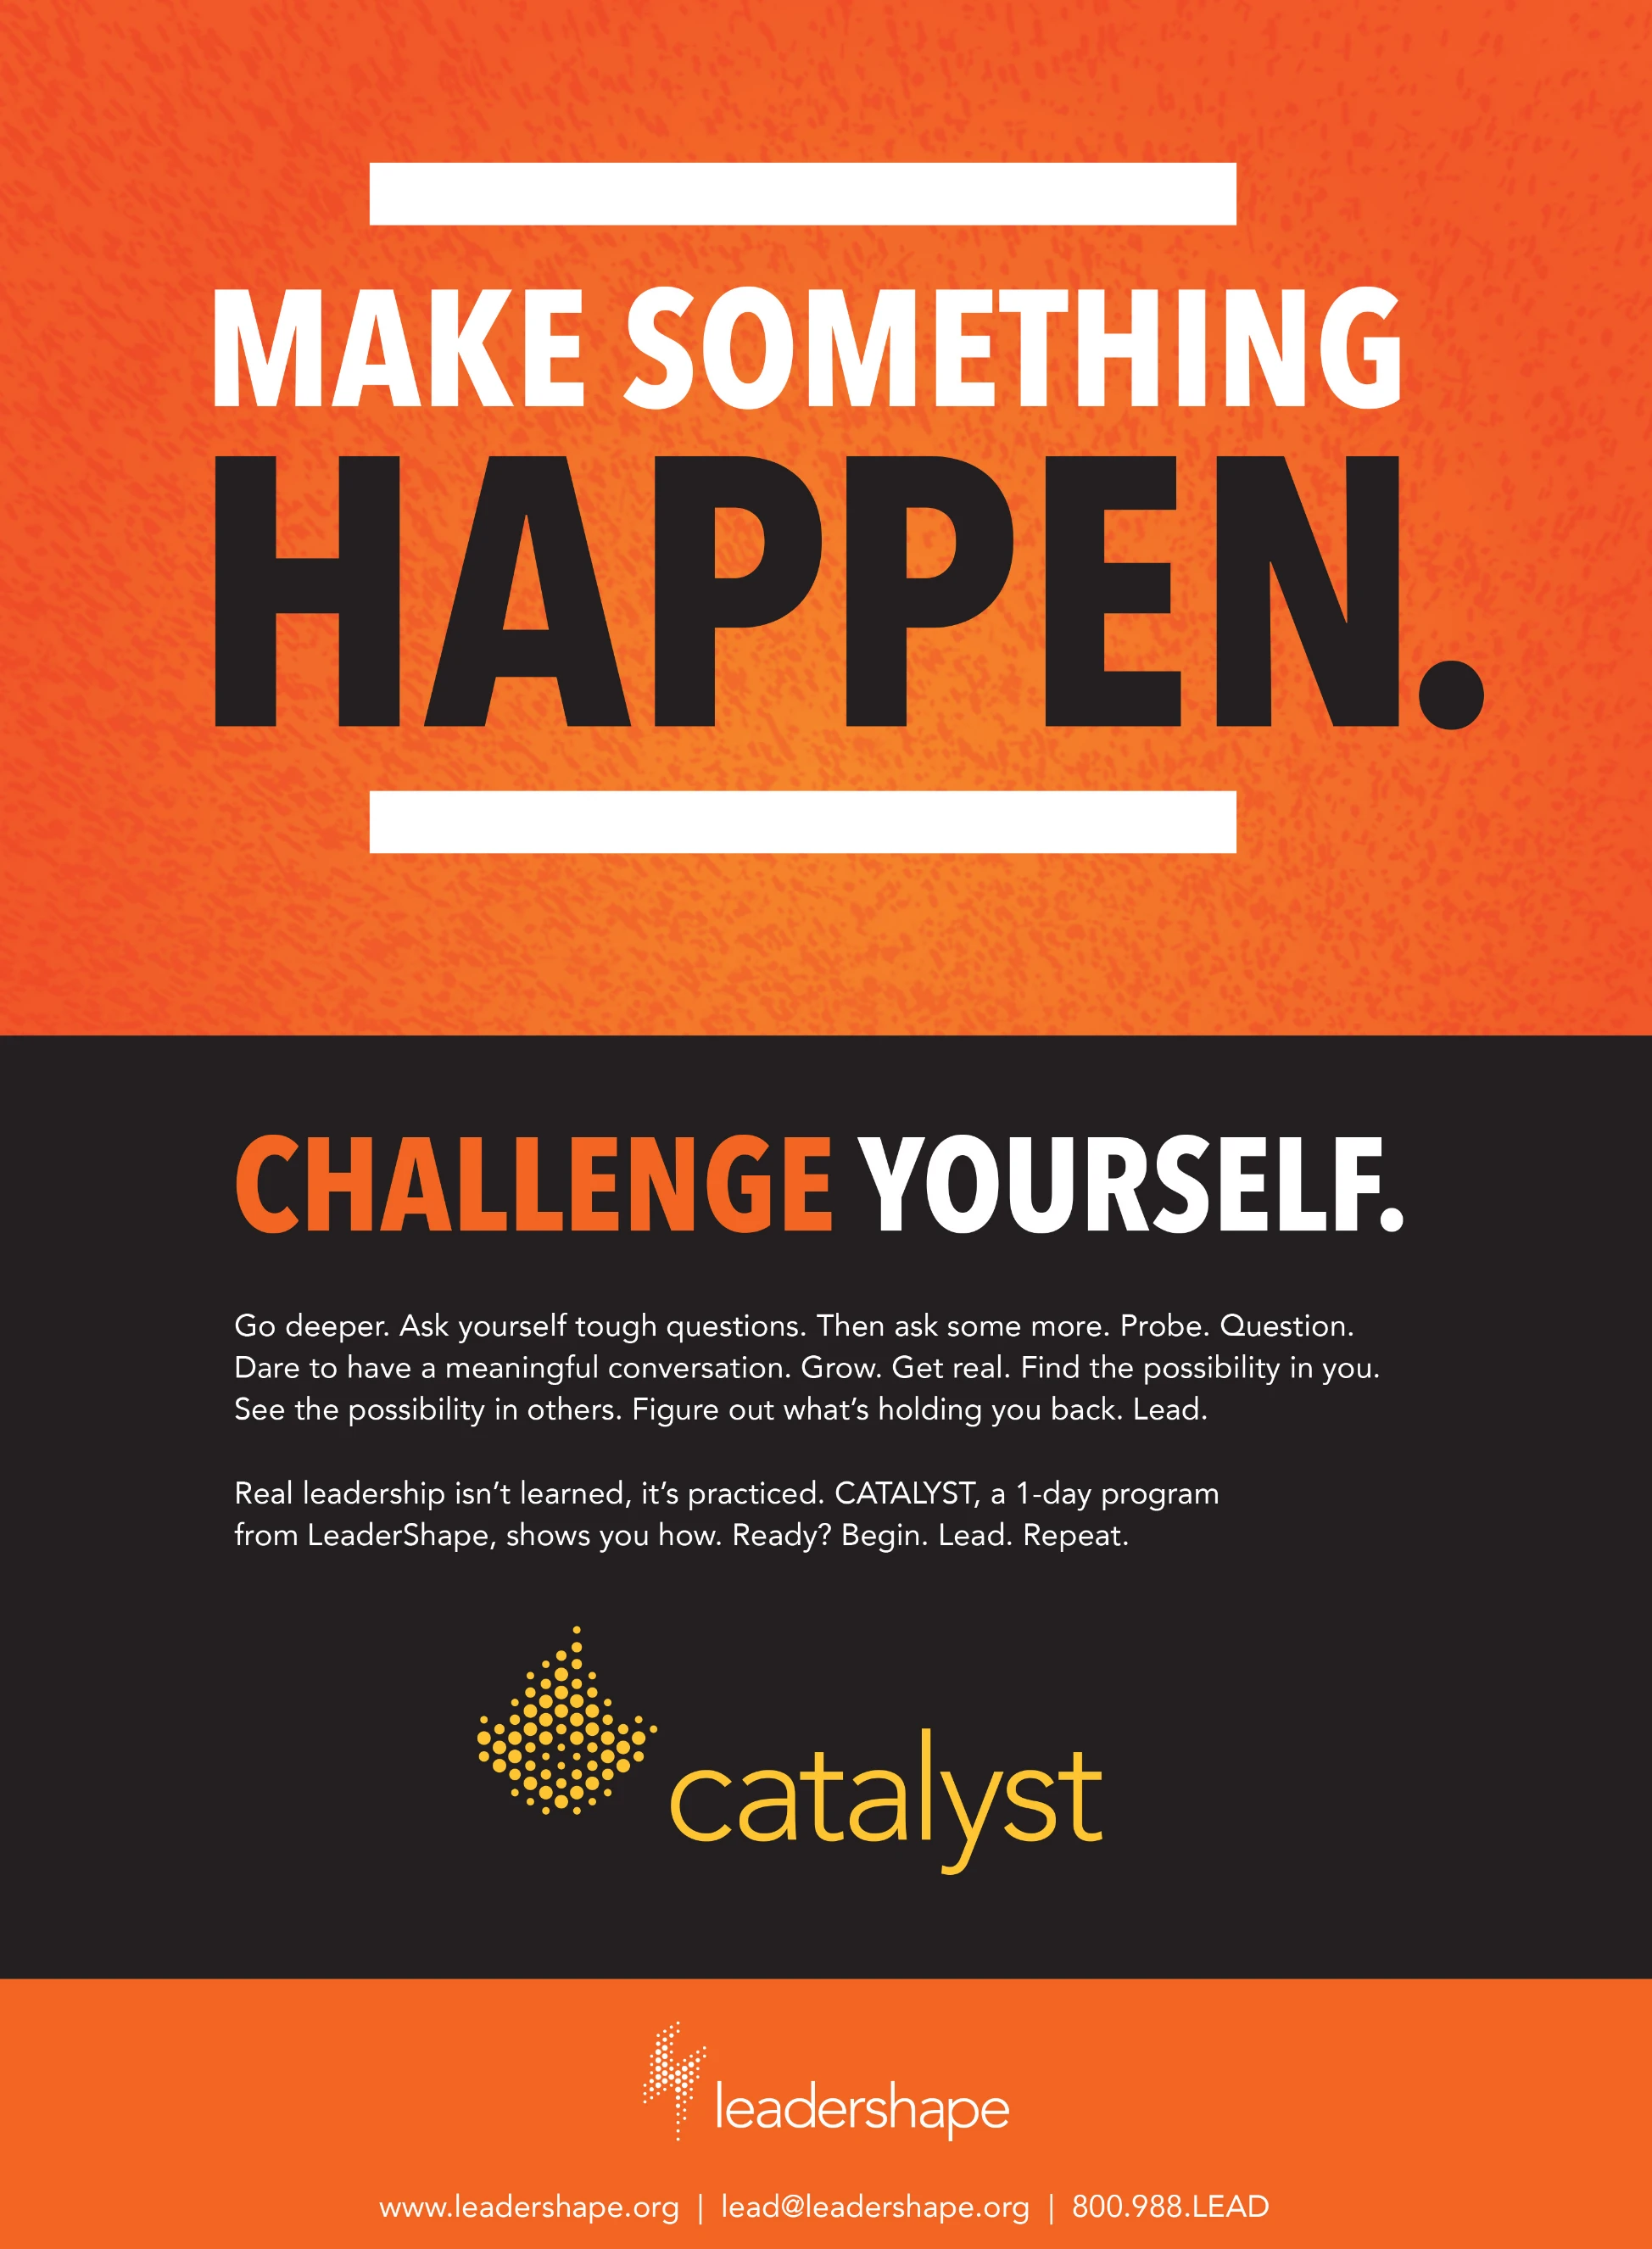 Catalyst - make something happen challenge yourself.